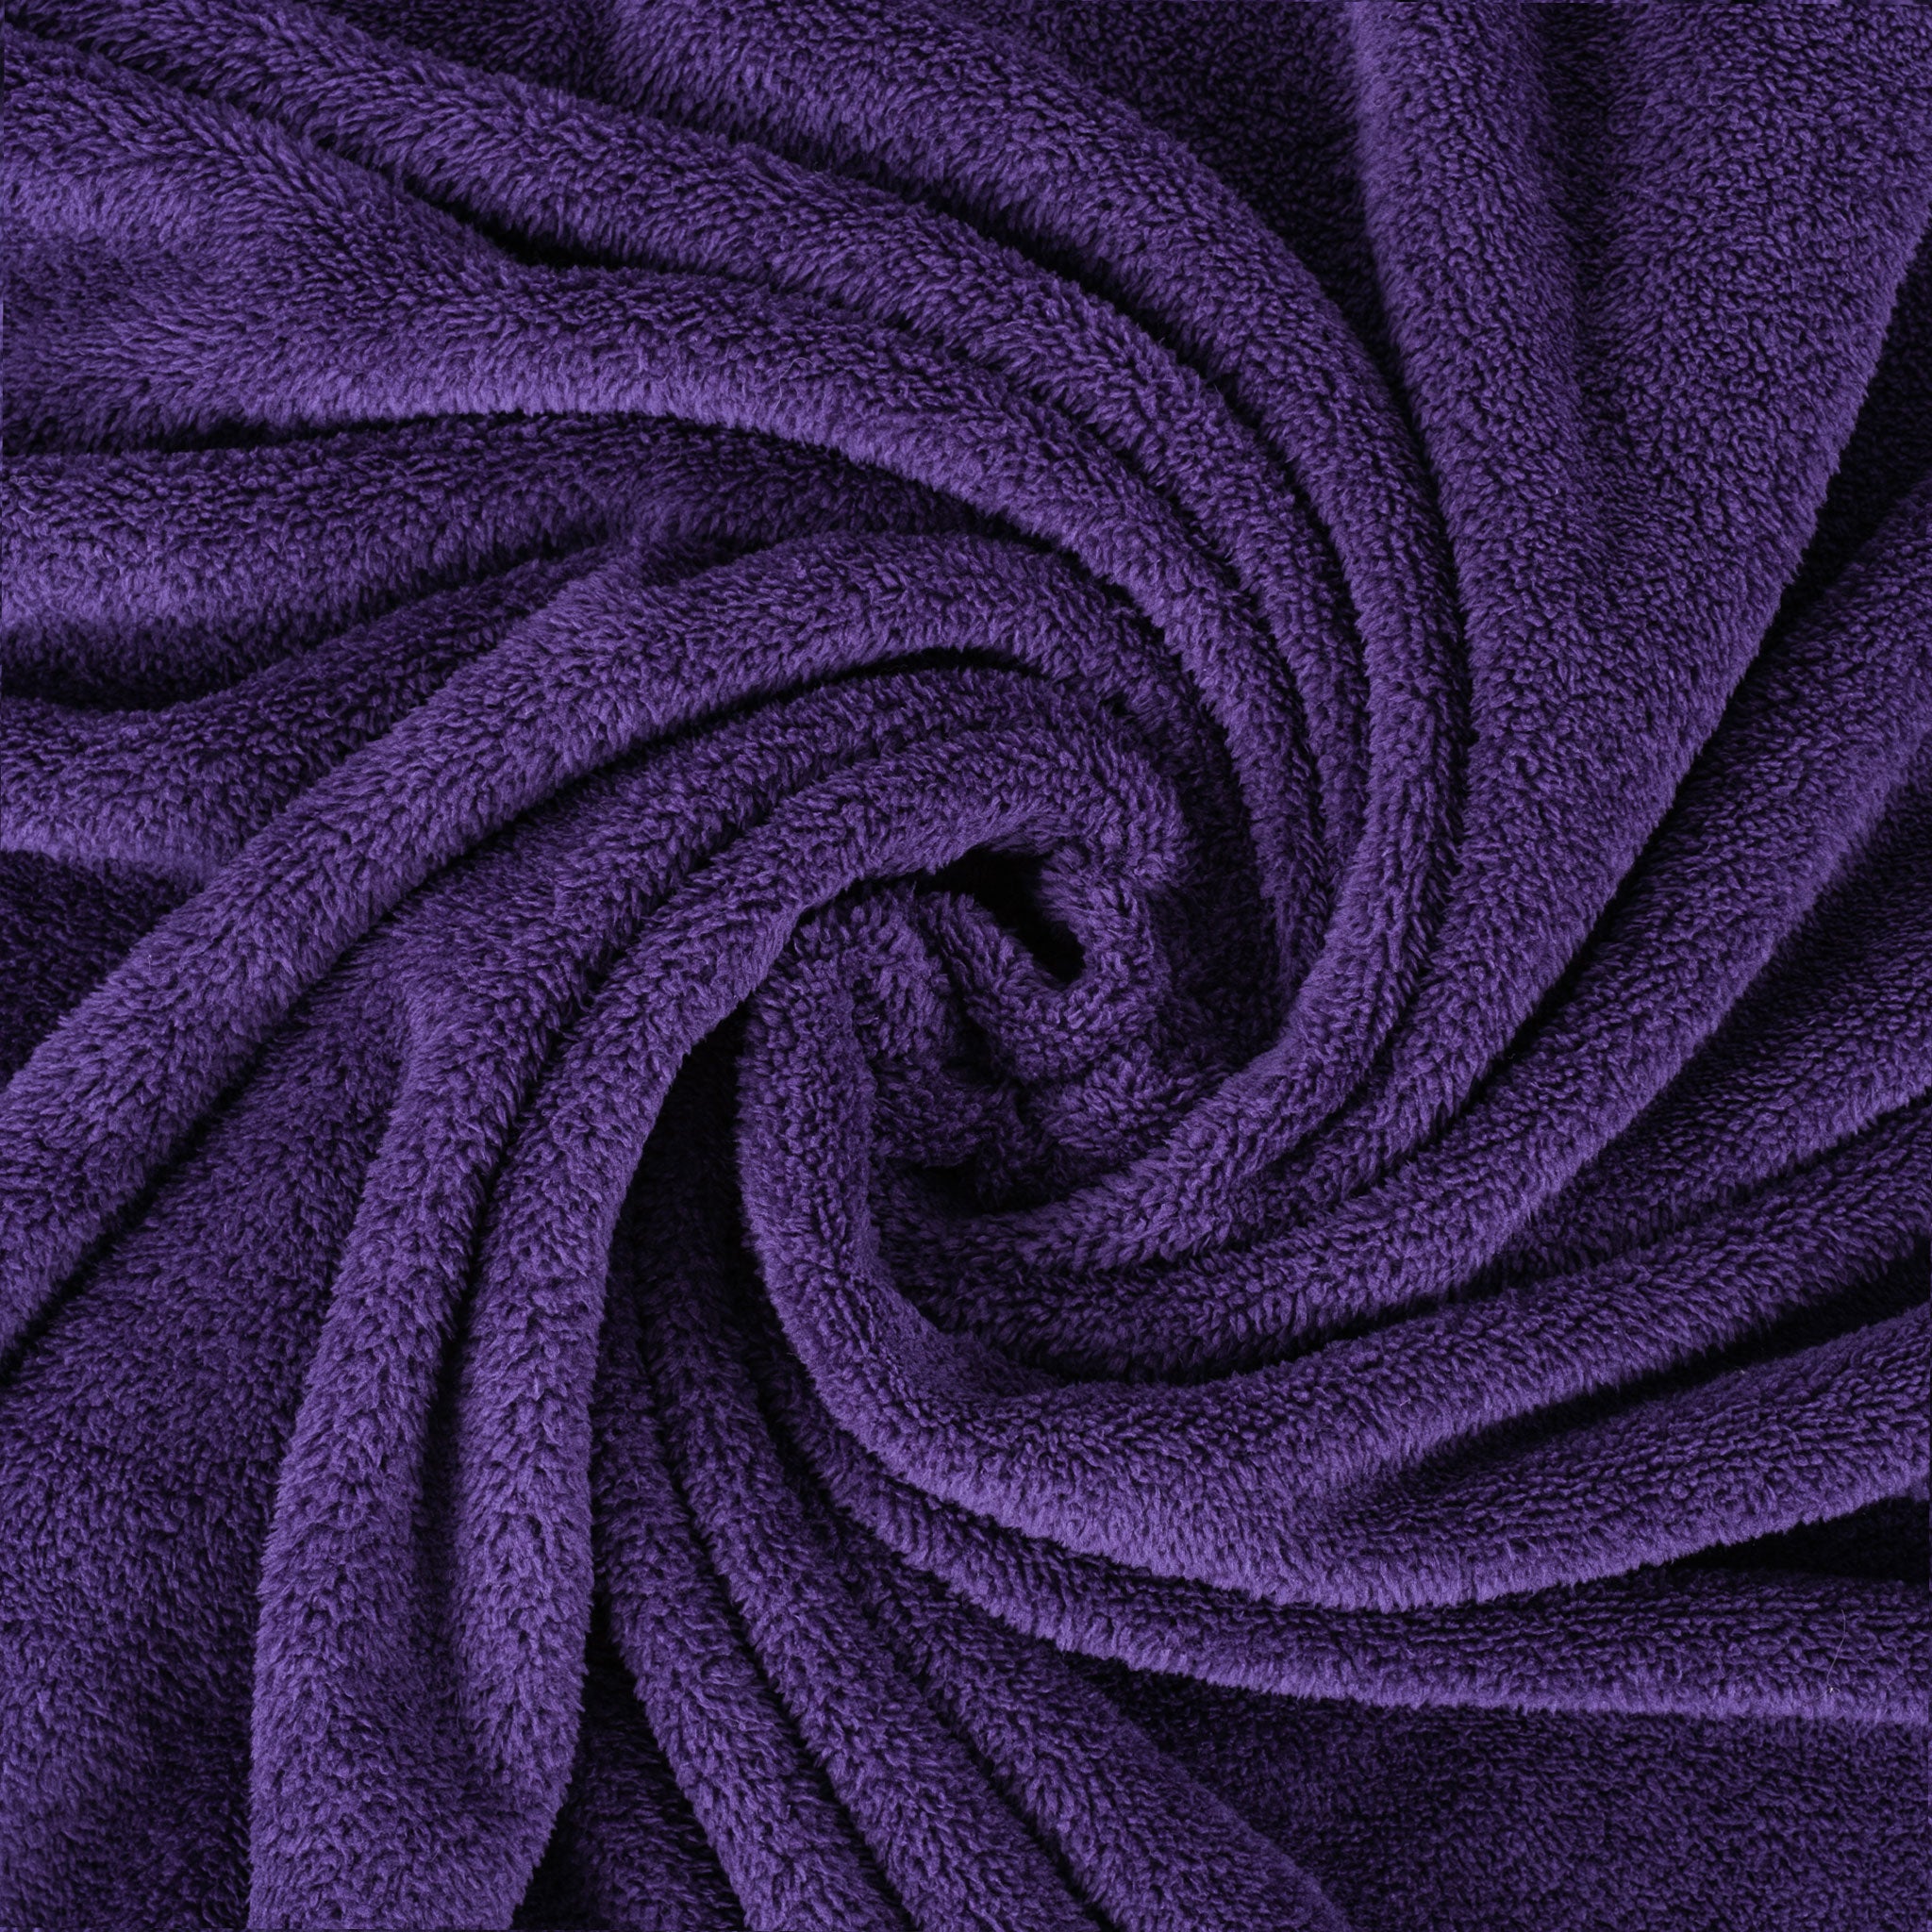 American Soft Linen - Bedding Fleece Blanket - Wholesale - 24 Set Case Pack - Throw Size 50x60 inches - Purple - 5